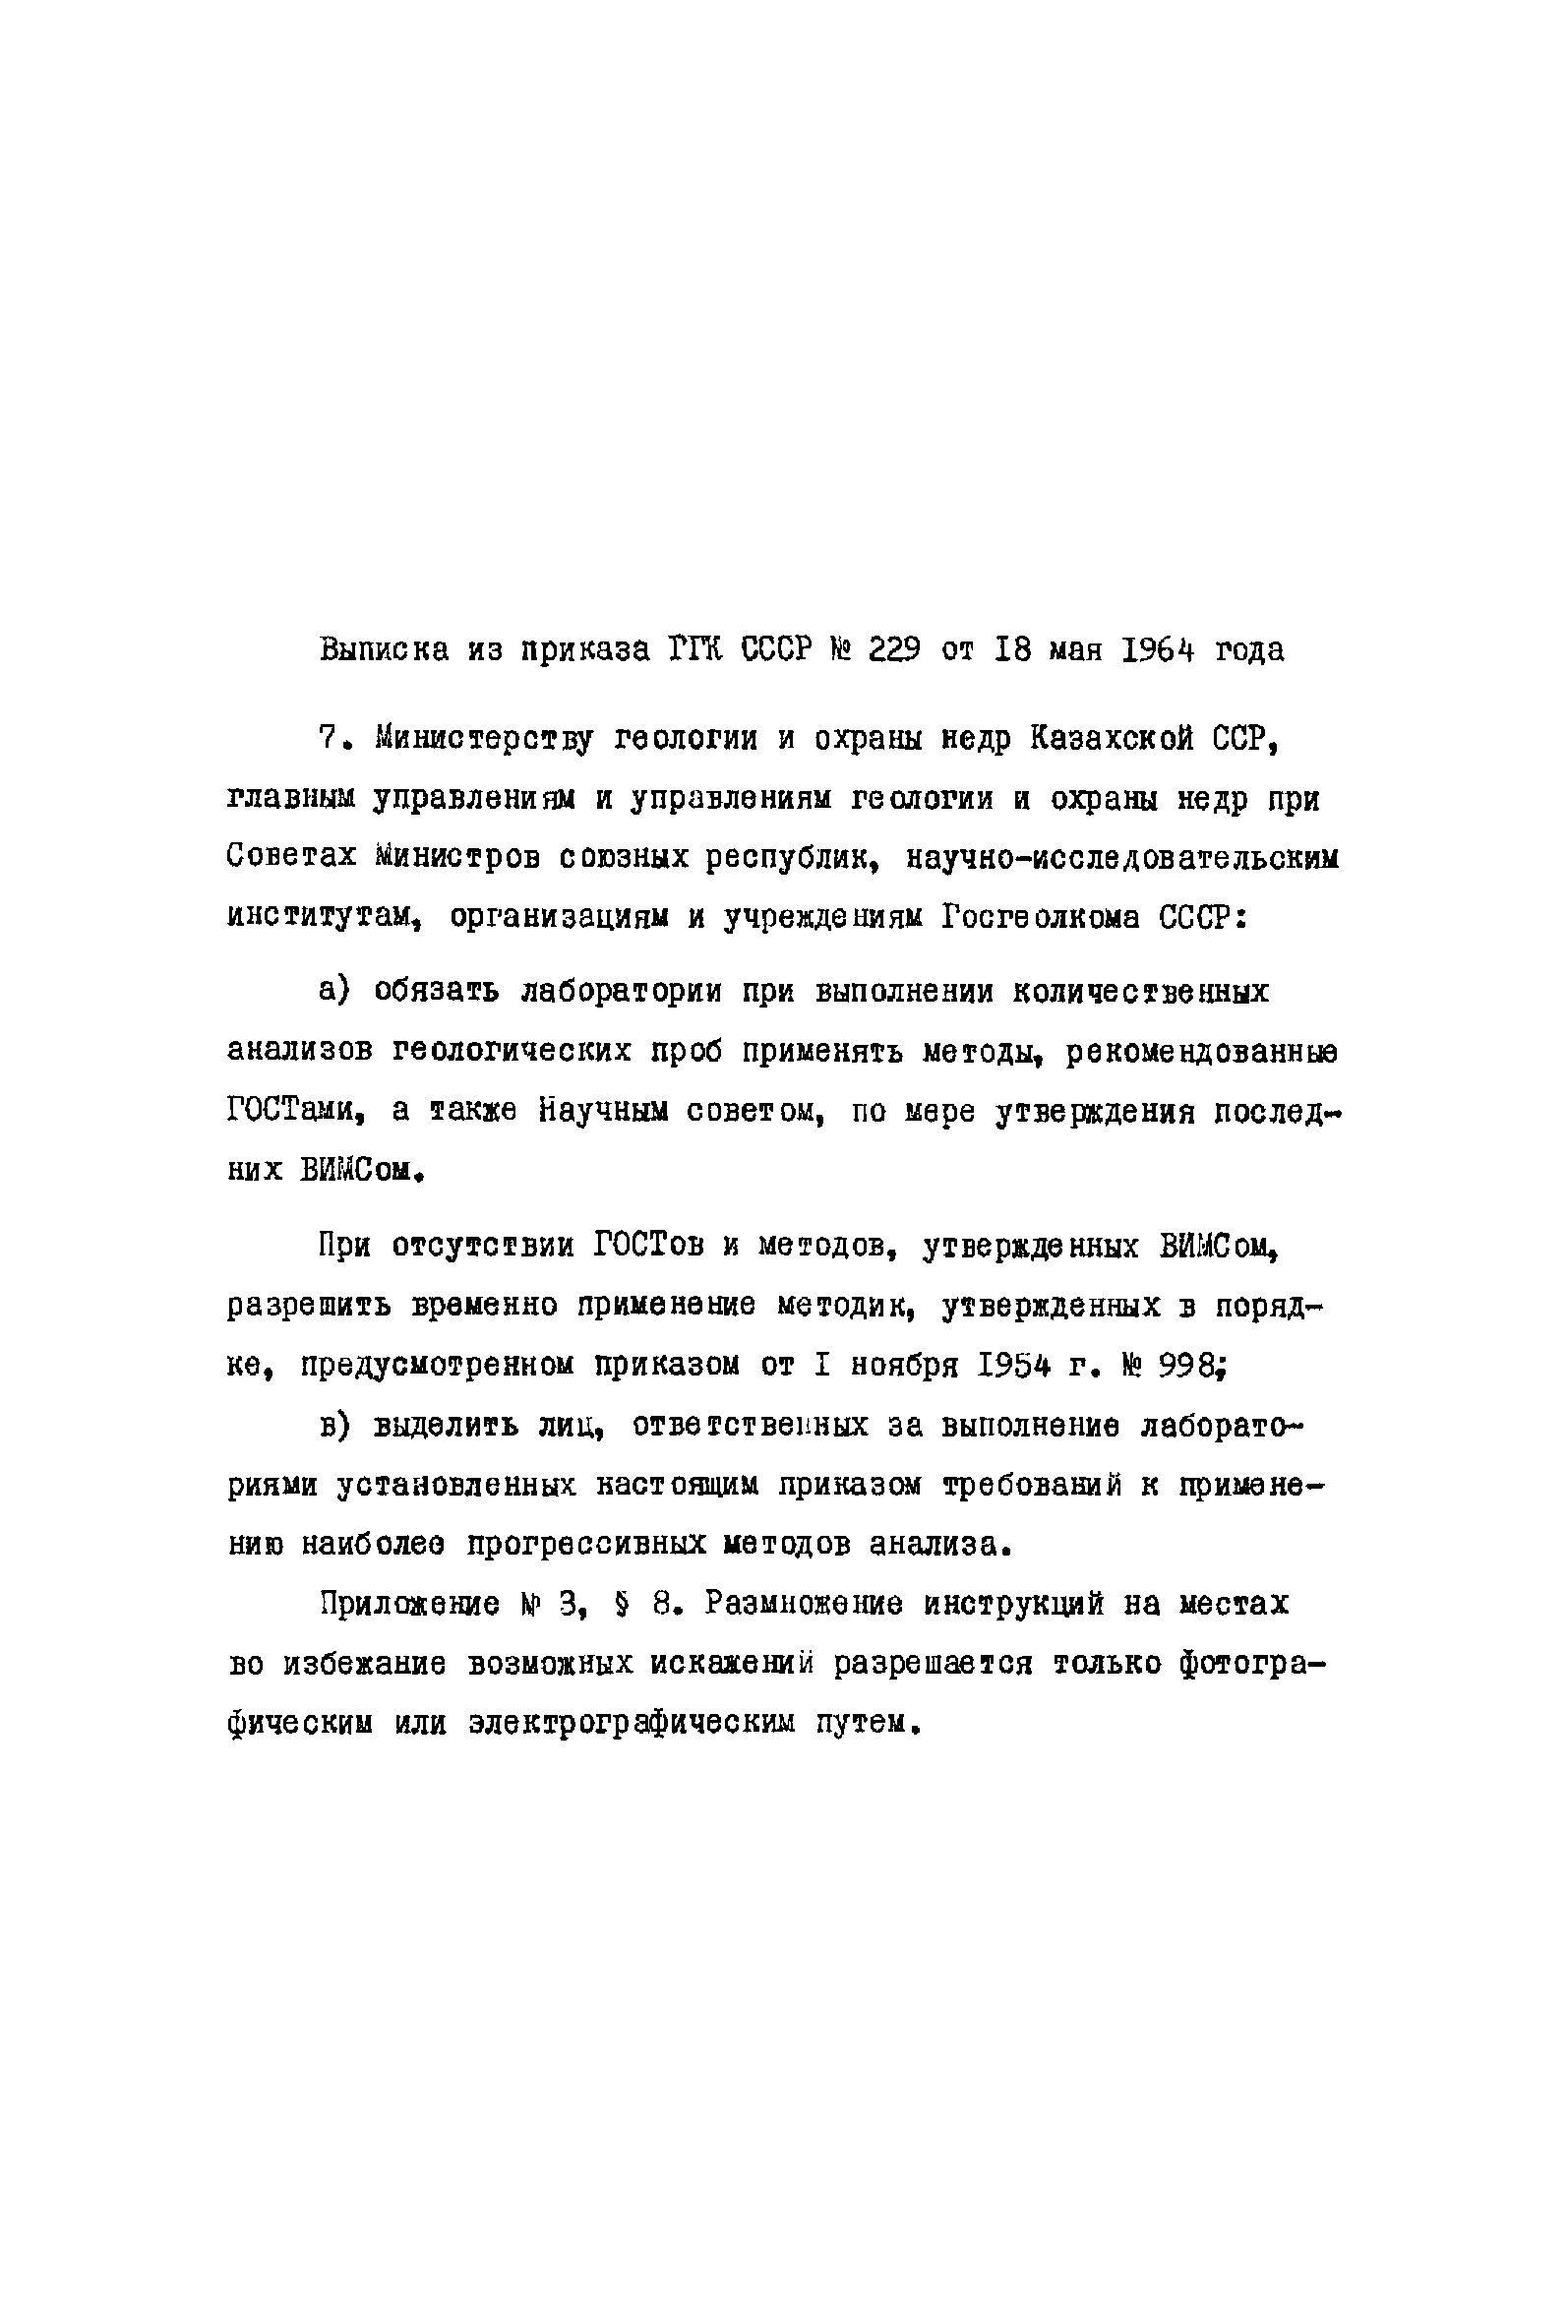 Инструкция НСАМ 82-Х